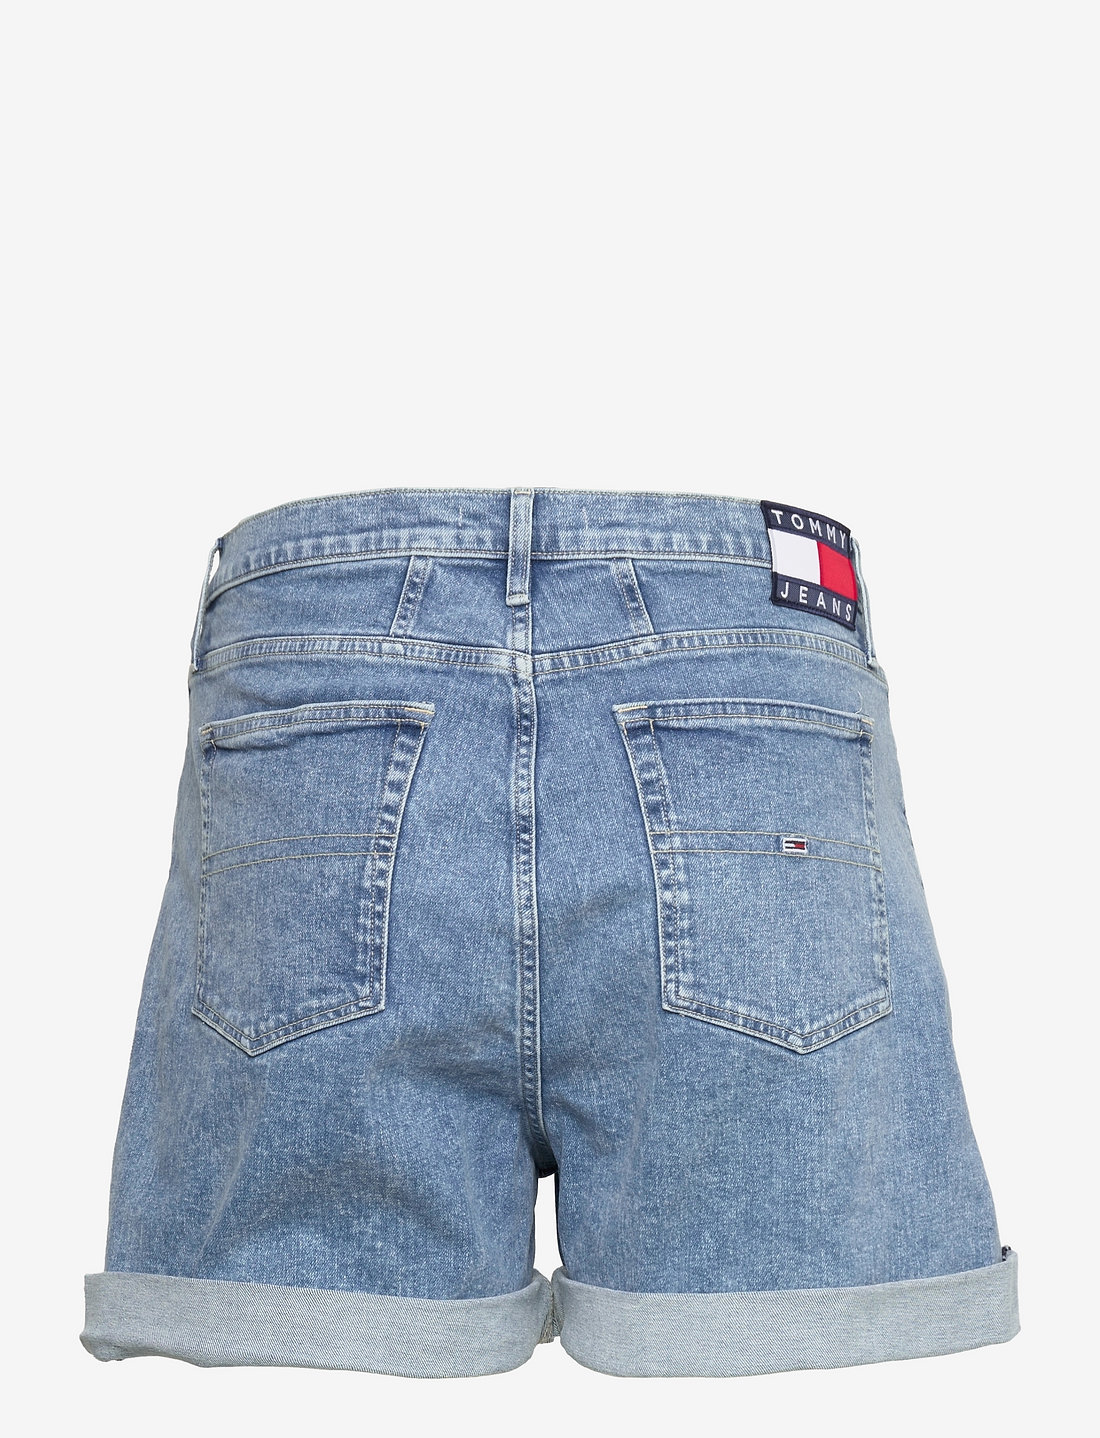 Tommy Jeans Plus Size Crv Mom Short - Denim shorts